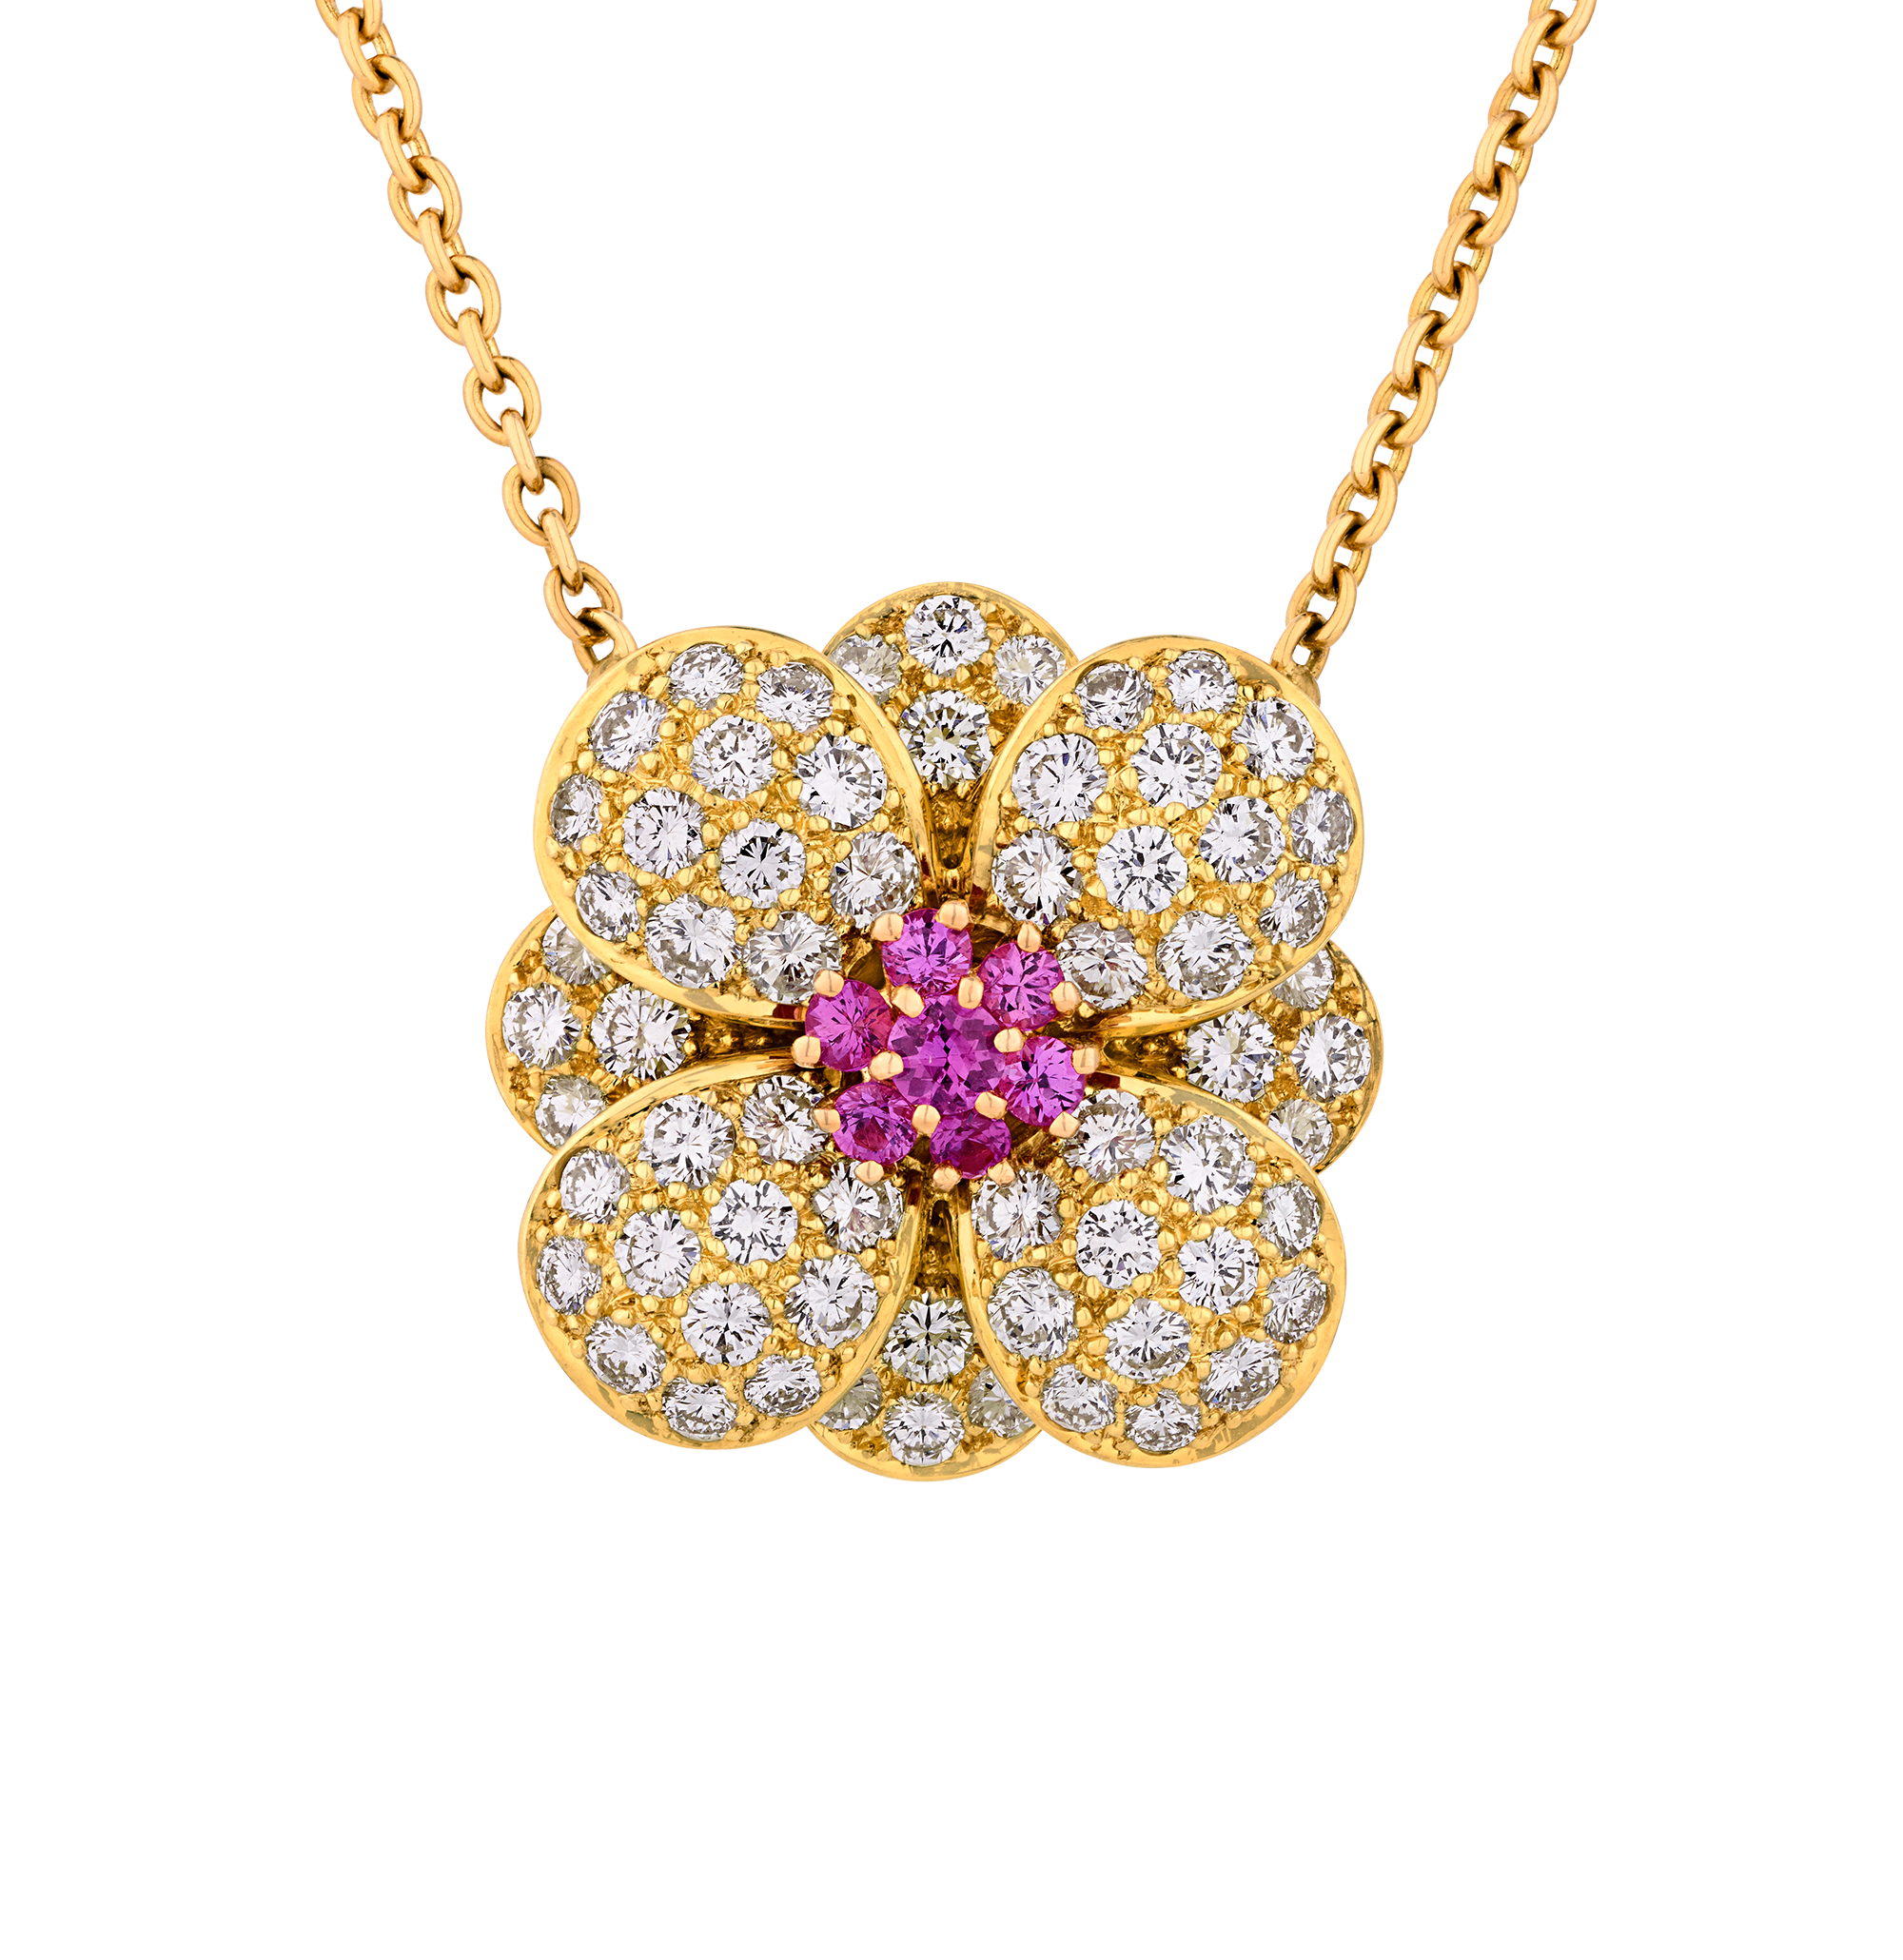 Van Cleef & Arpels Diamond Flower Pendant, 1.92 carats